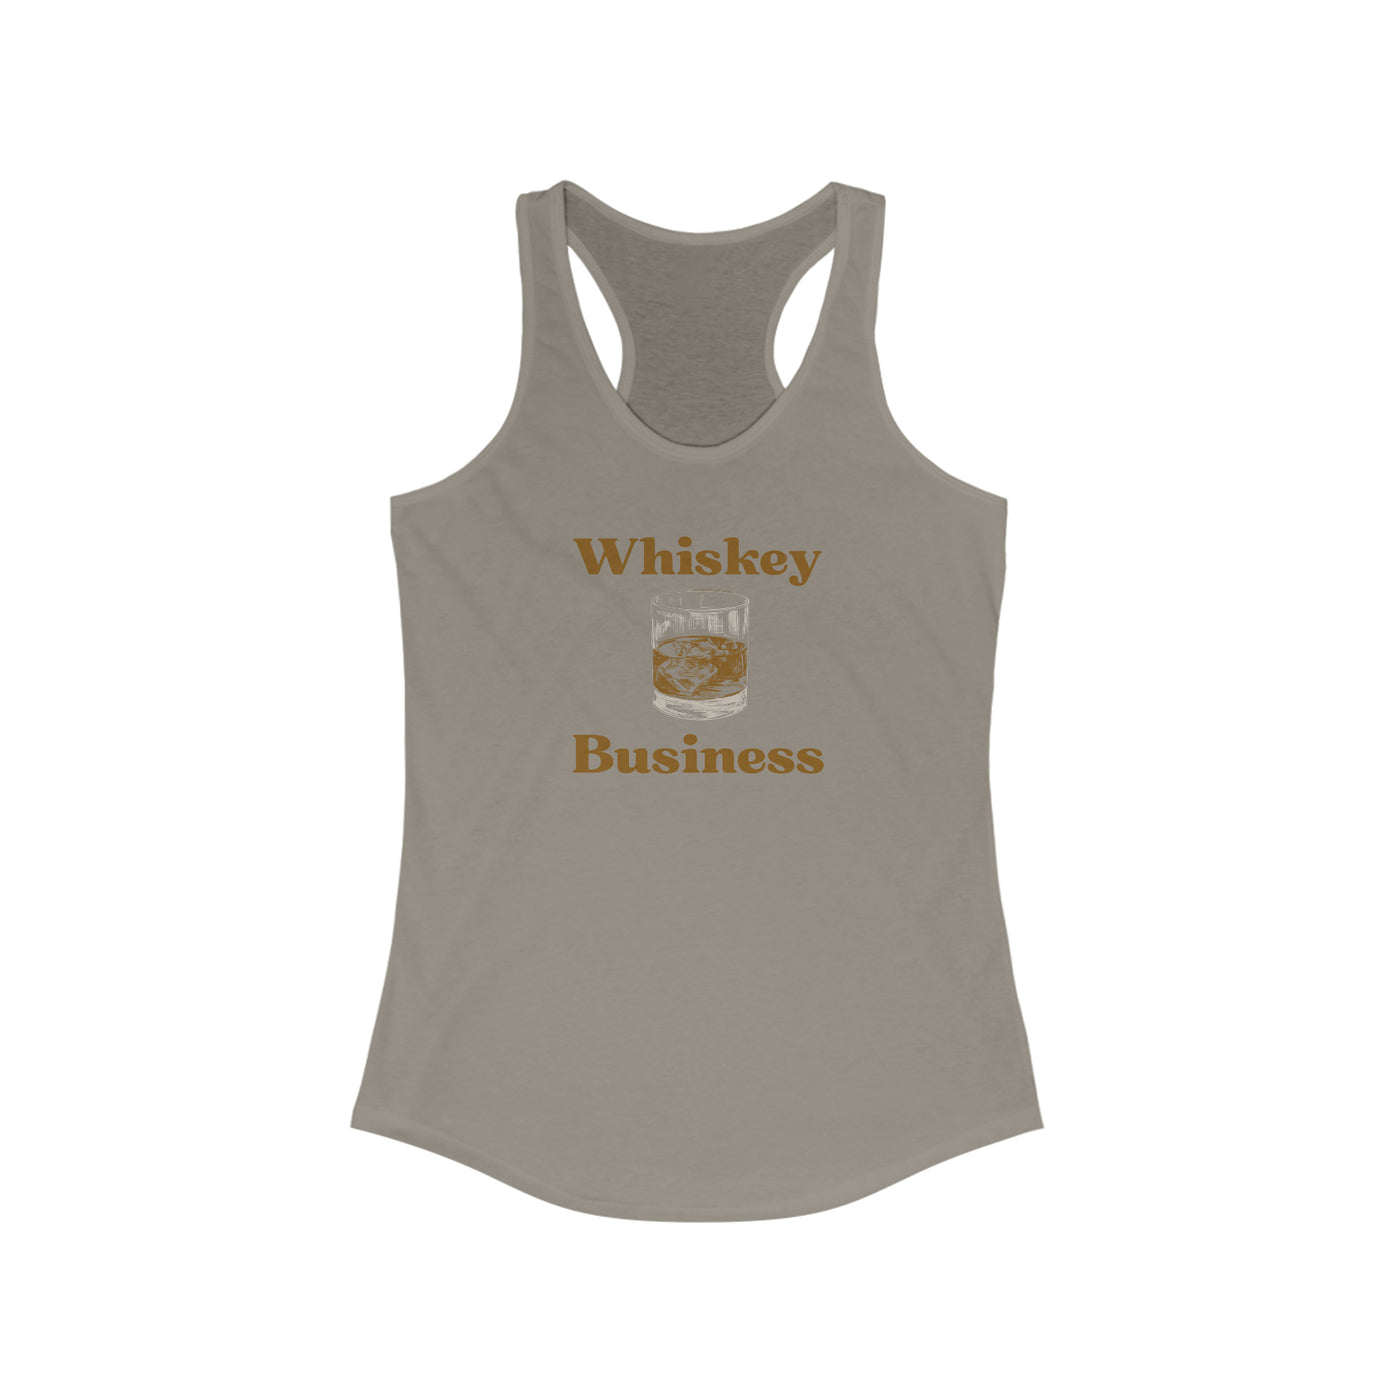 Whiskey Business Women's Racerback Tank